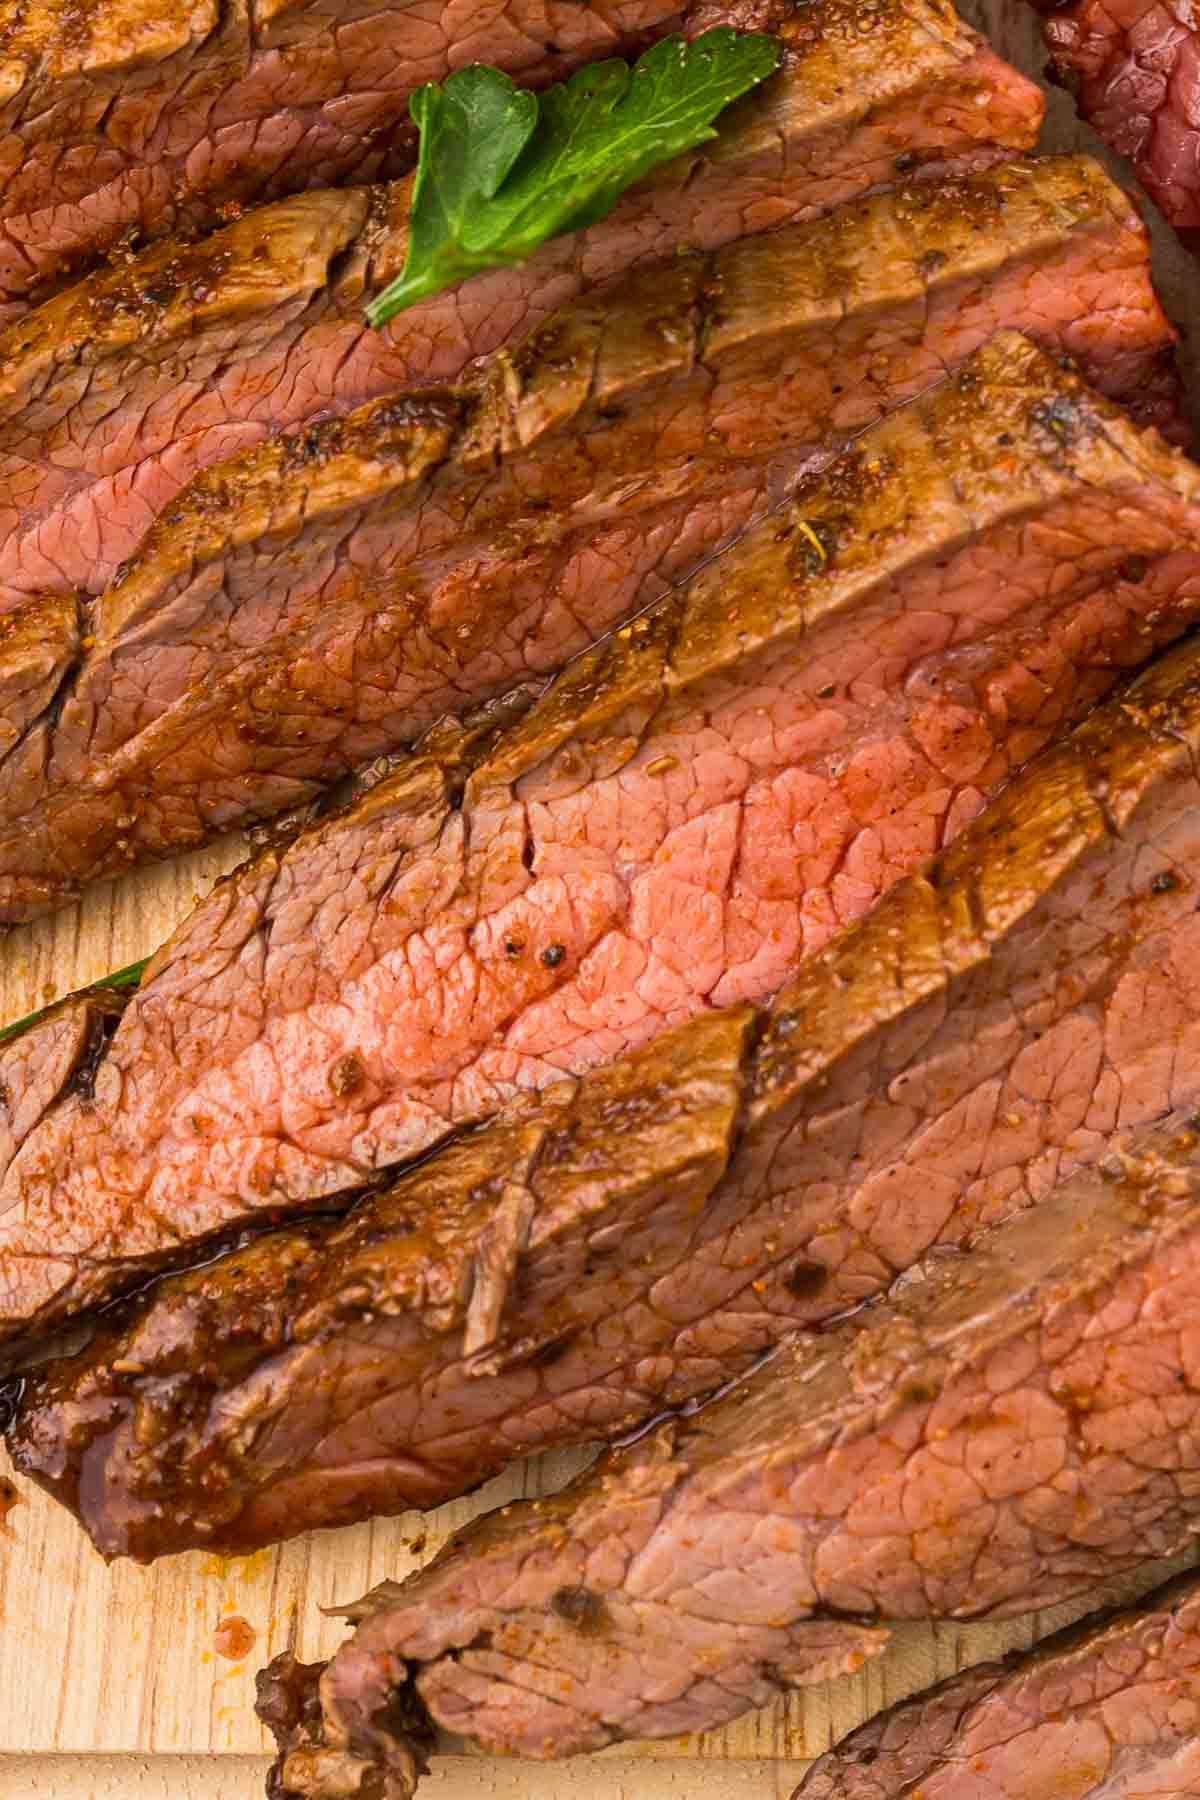 Sliced air fryer flank steak on a wooden cutting board.